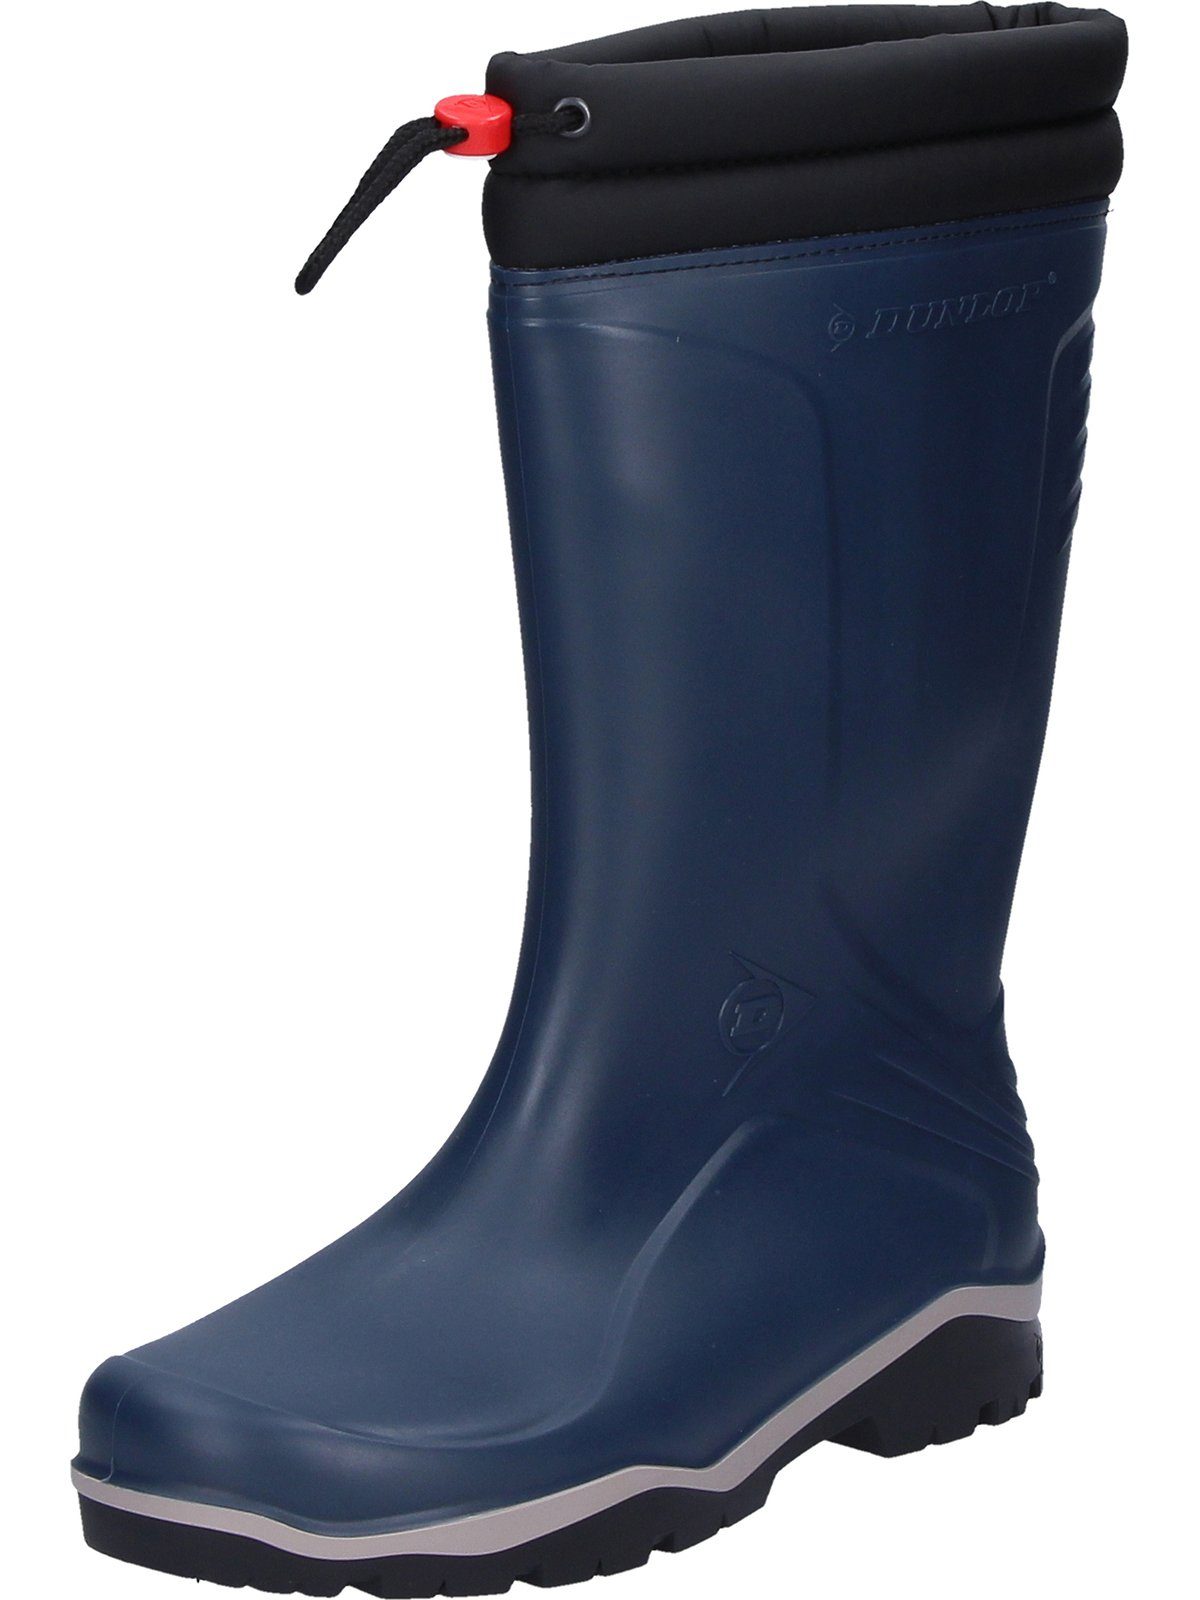 Dunlop_Workwear Blizzard blau Winterstiefel | Stiefel